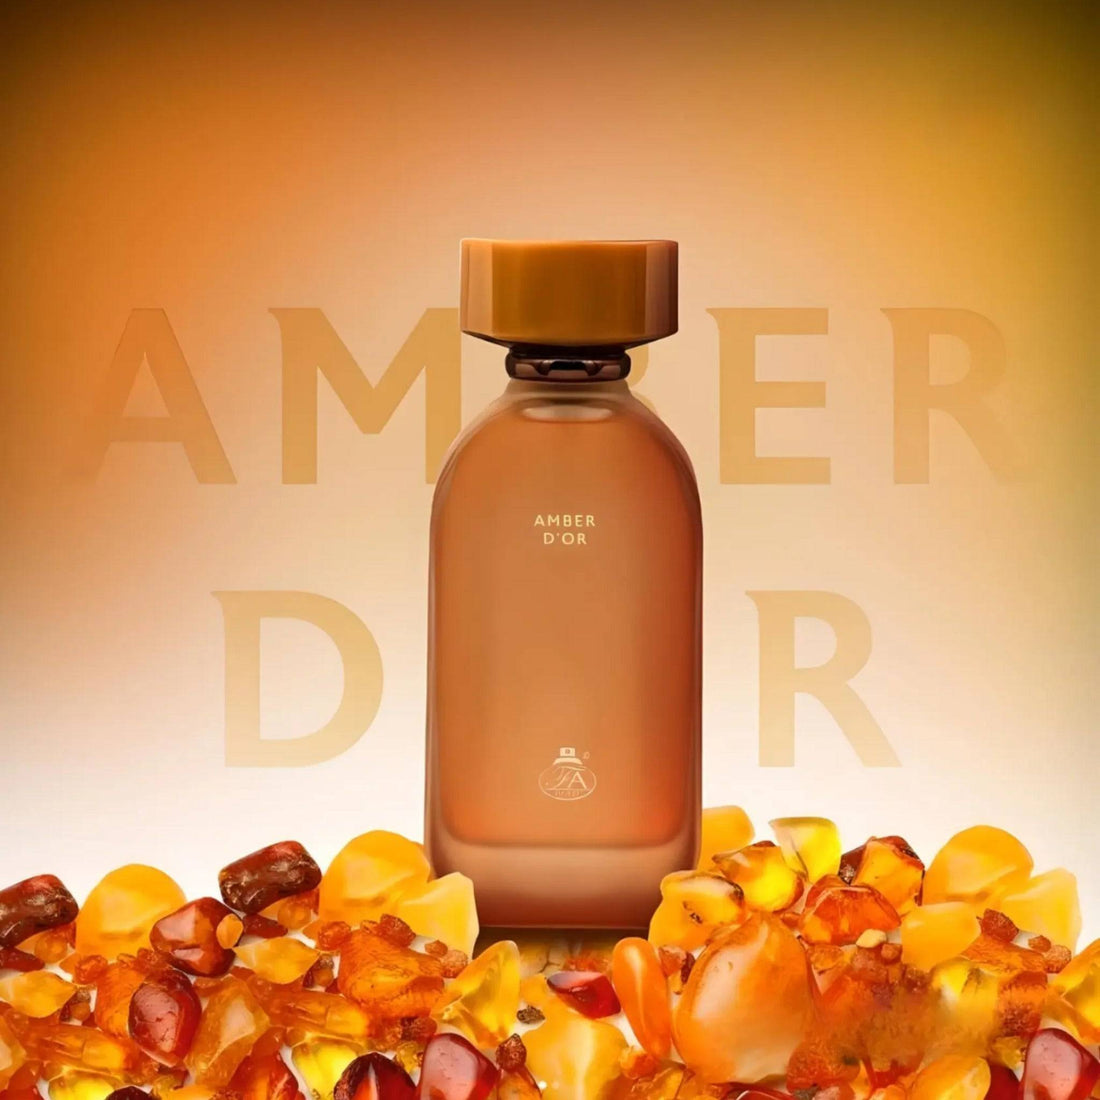 Elegant 100ml bottle of Amber D’or Eau De Parfum by FA Paris, showcasing its luxurious and sophisticated fragrance.